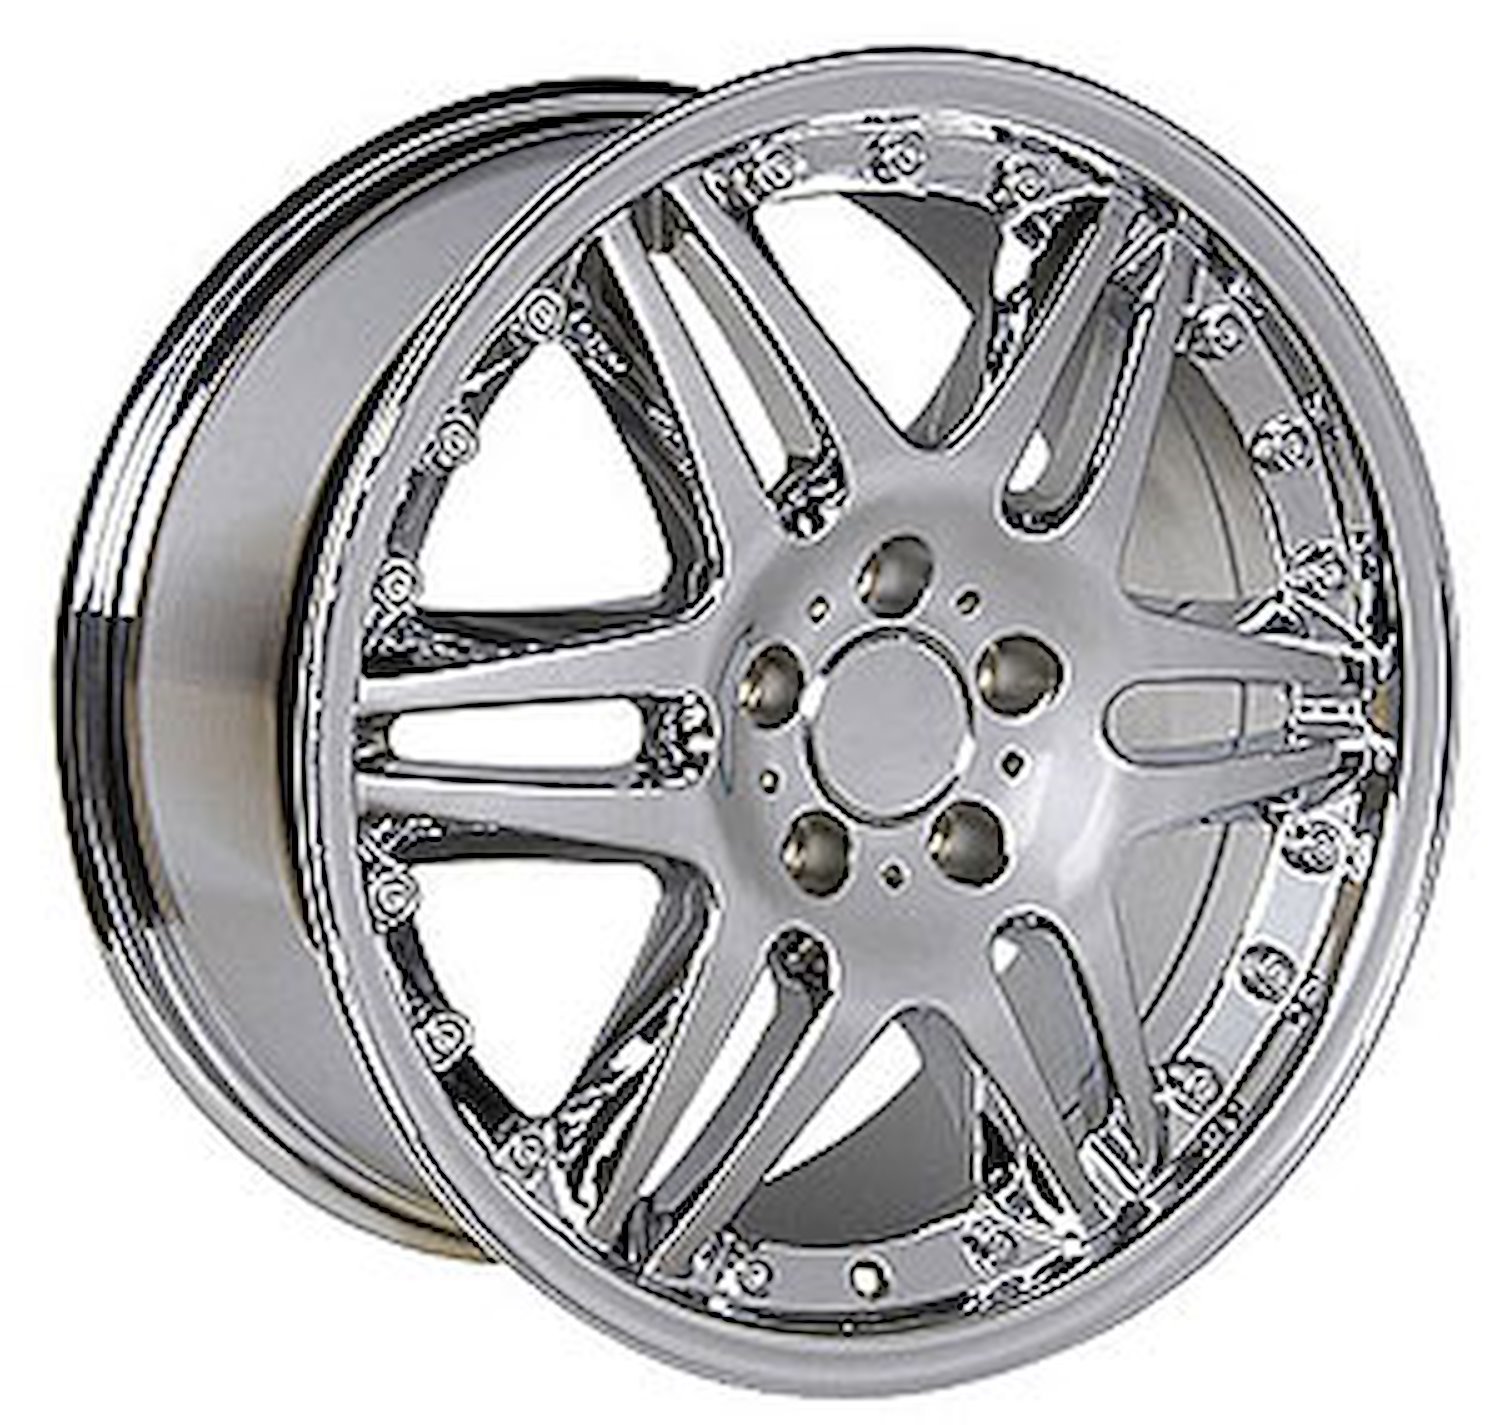 Mercedes-Benz Split-Spoke Wheel Size: 18" x 8.5" Bolt Pattern: 5 x 112 Rear Spacing: 6.13" Offset: +35mm